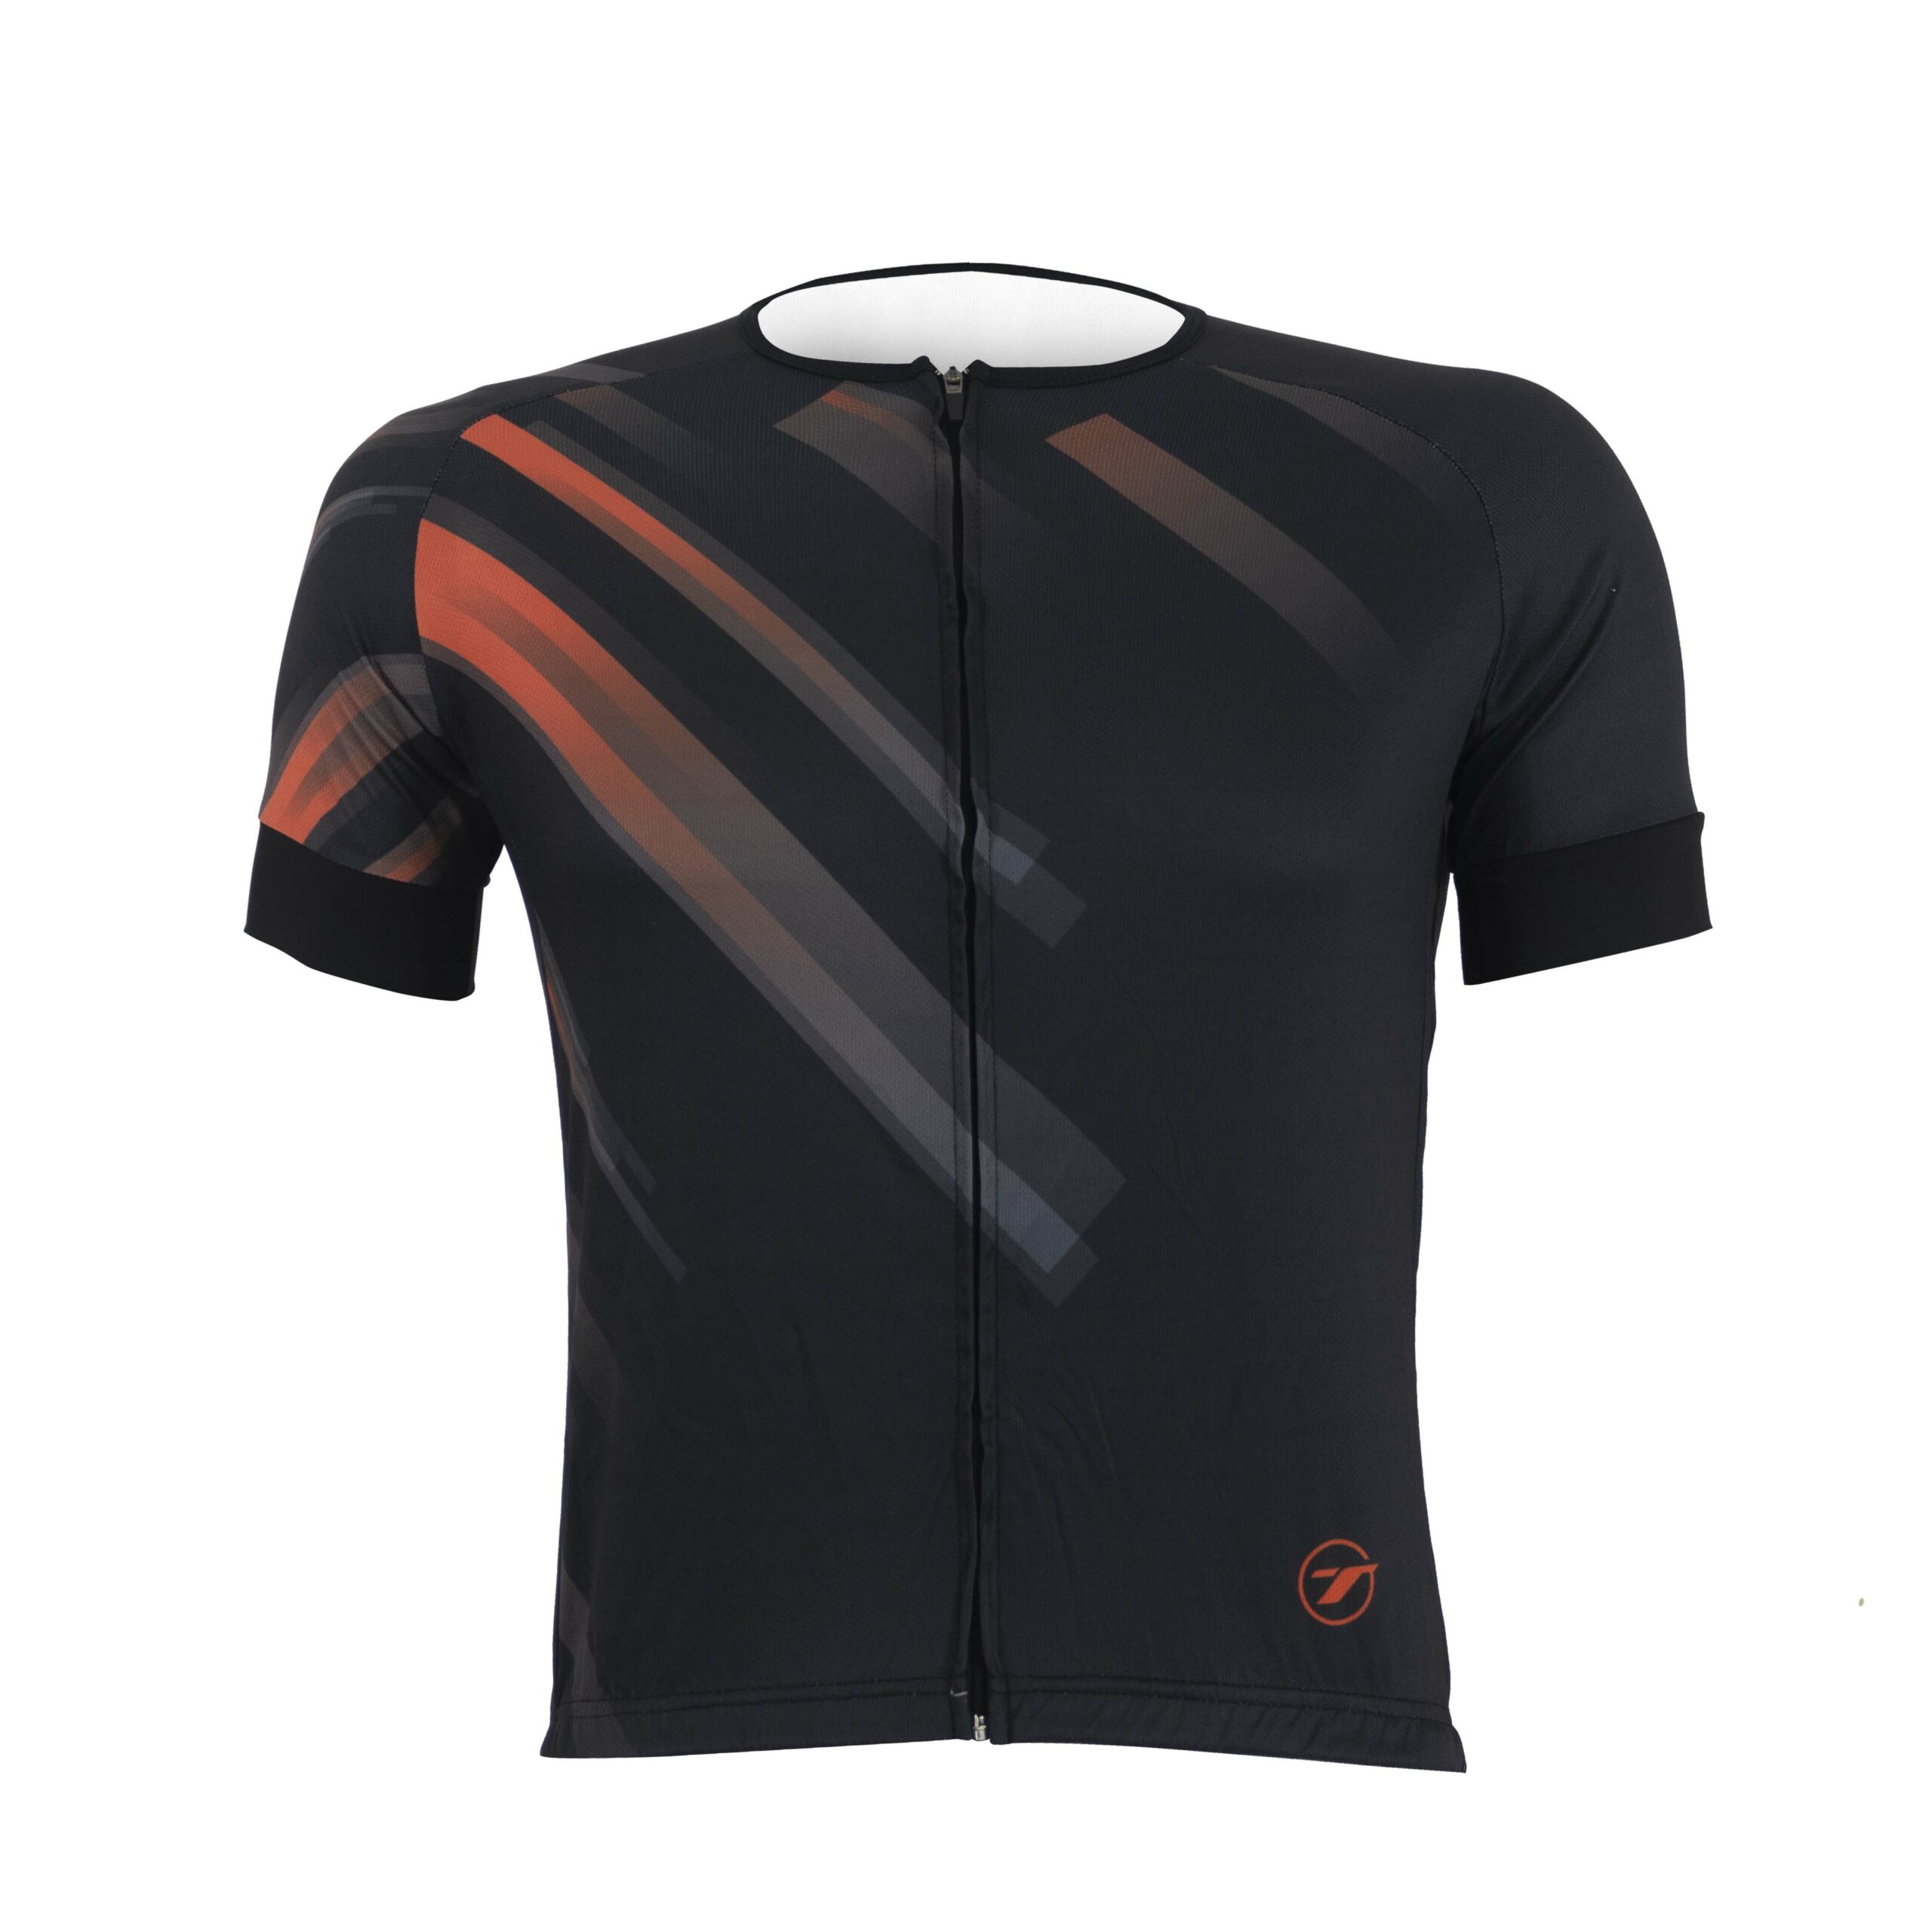 Camisa para ciclismo SUNNY | RIDE LINE - Preto/Laranja, P